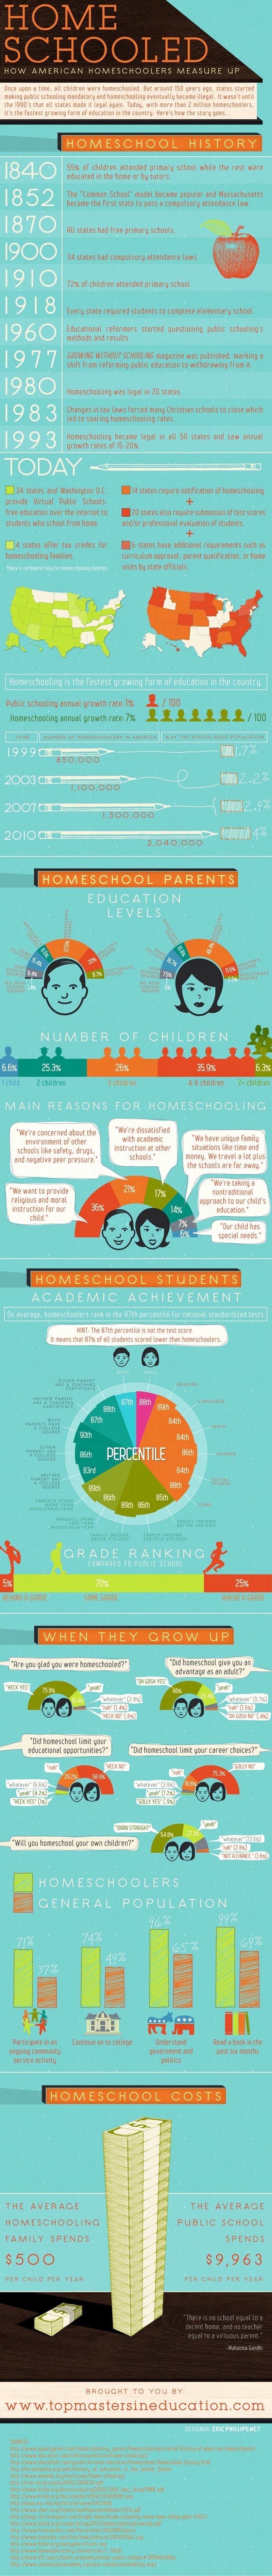 How do homeschoolers compare